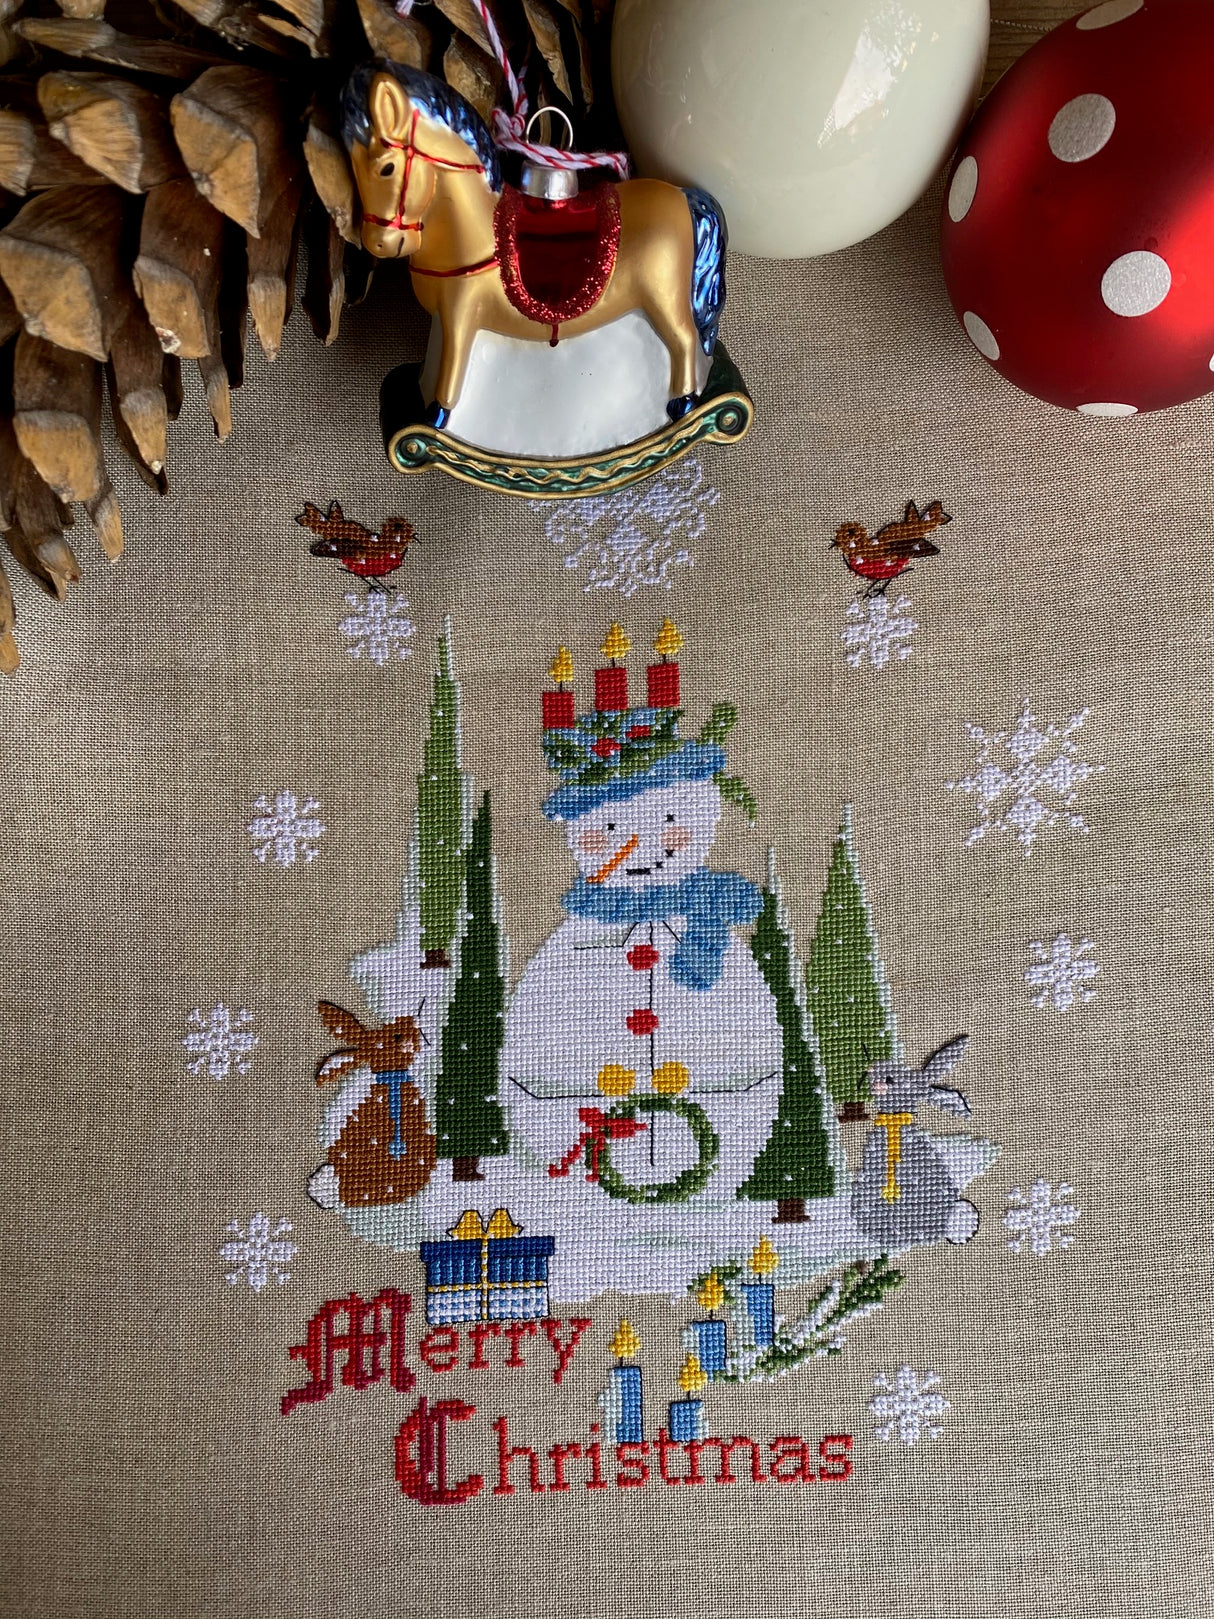 Regali di Natale - Lilli Violette - Cross Stitch Chart